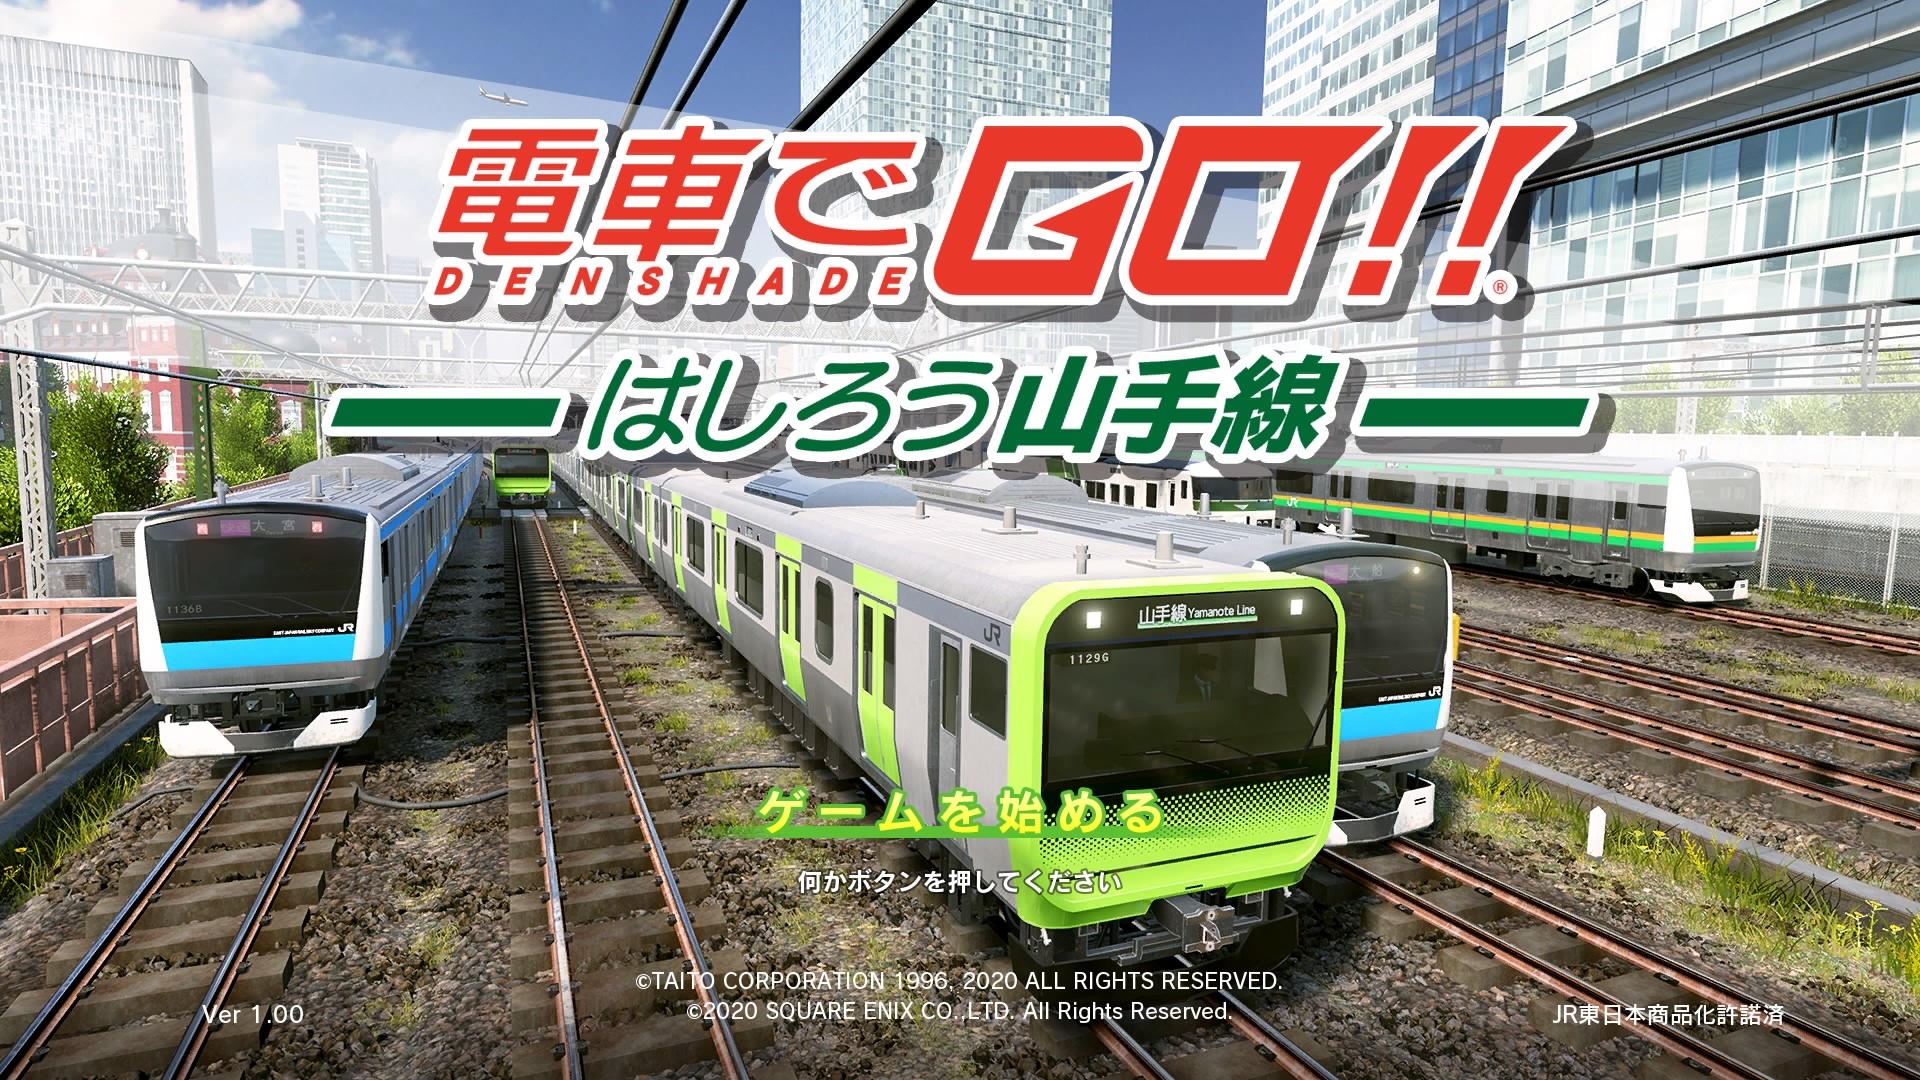 Гоу де. Densha. 電車でgo. Yamanote line. PLAYSTATION Densha de go.